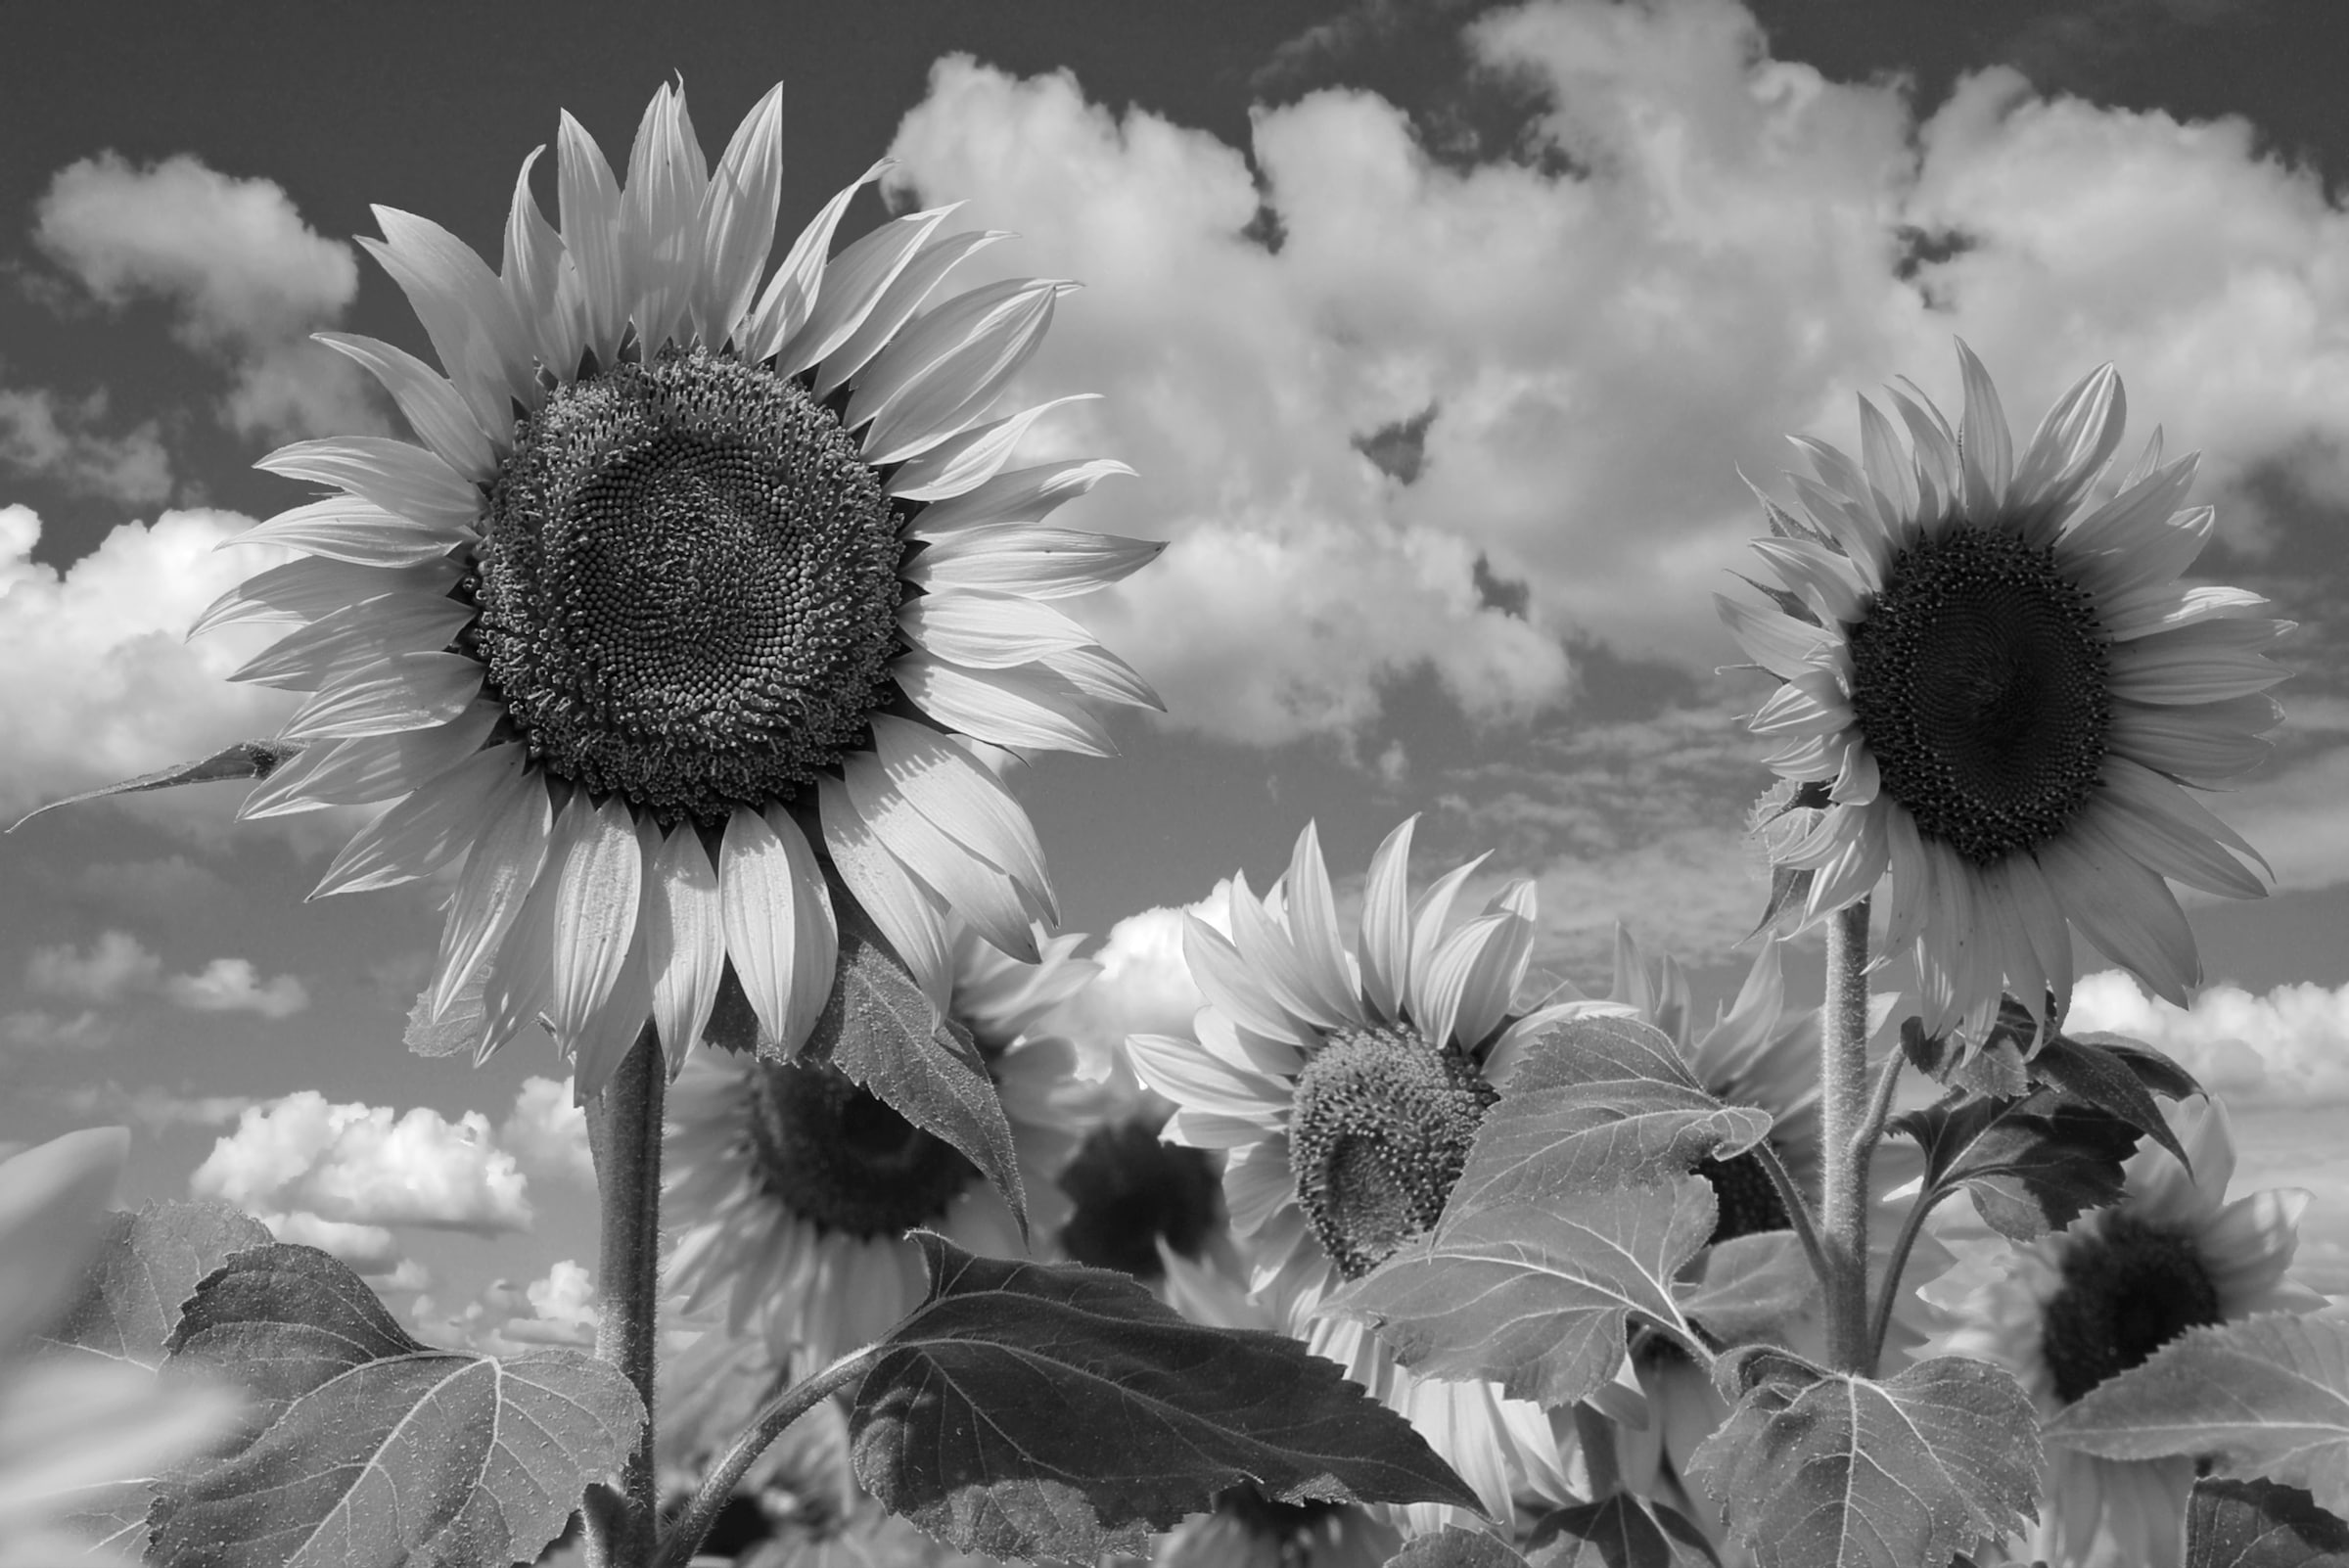 Fototapete »Sonnenblume Schwarz & Weiss«